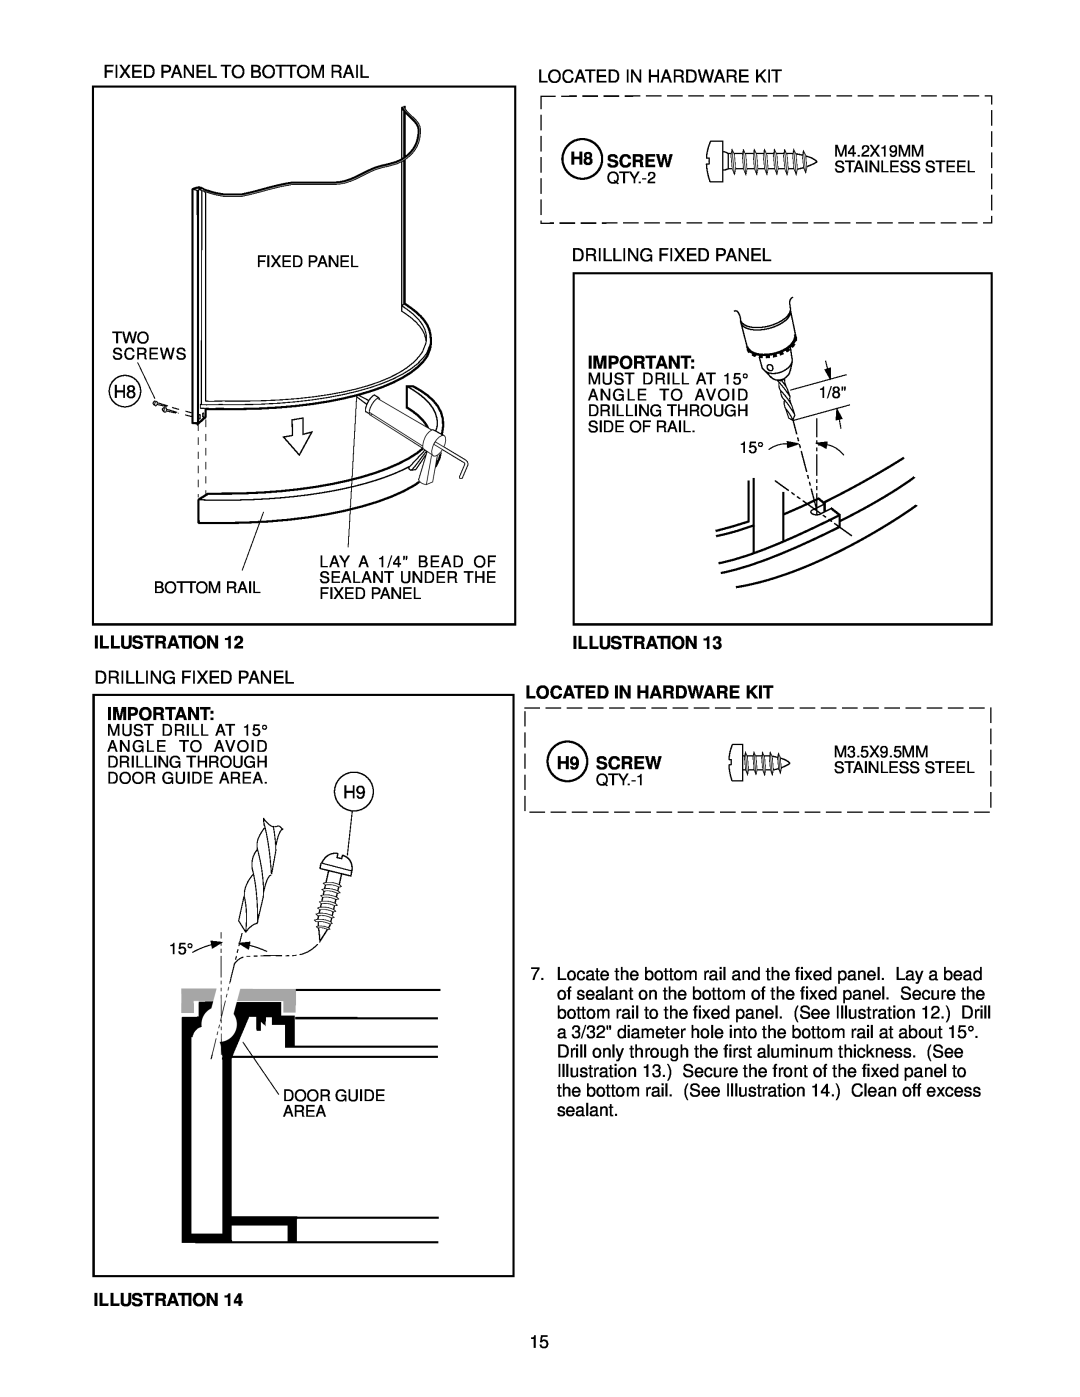 Jacuzzi J-SHOWER TOWERTM manual Screw, Illustration Located In Hardware Kit, H9 SCREW 